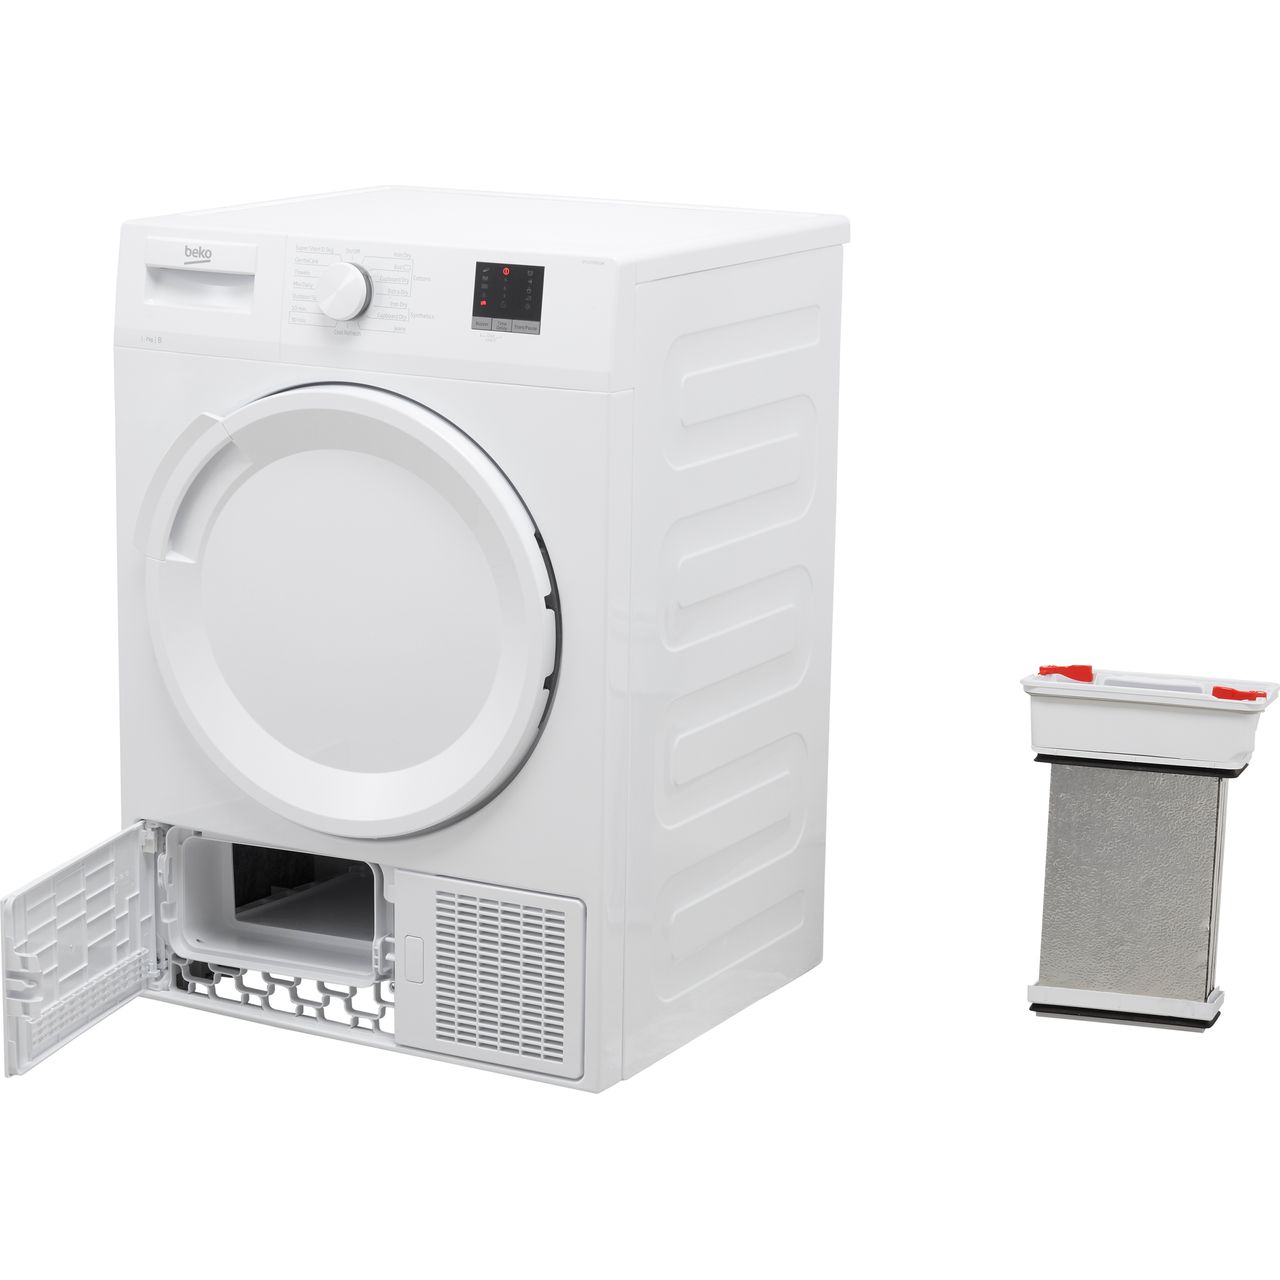 Condenser Filter for Beko Tumble Dryer : : Large